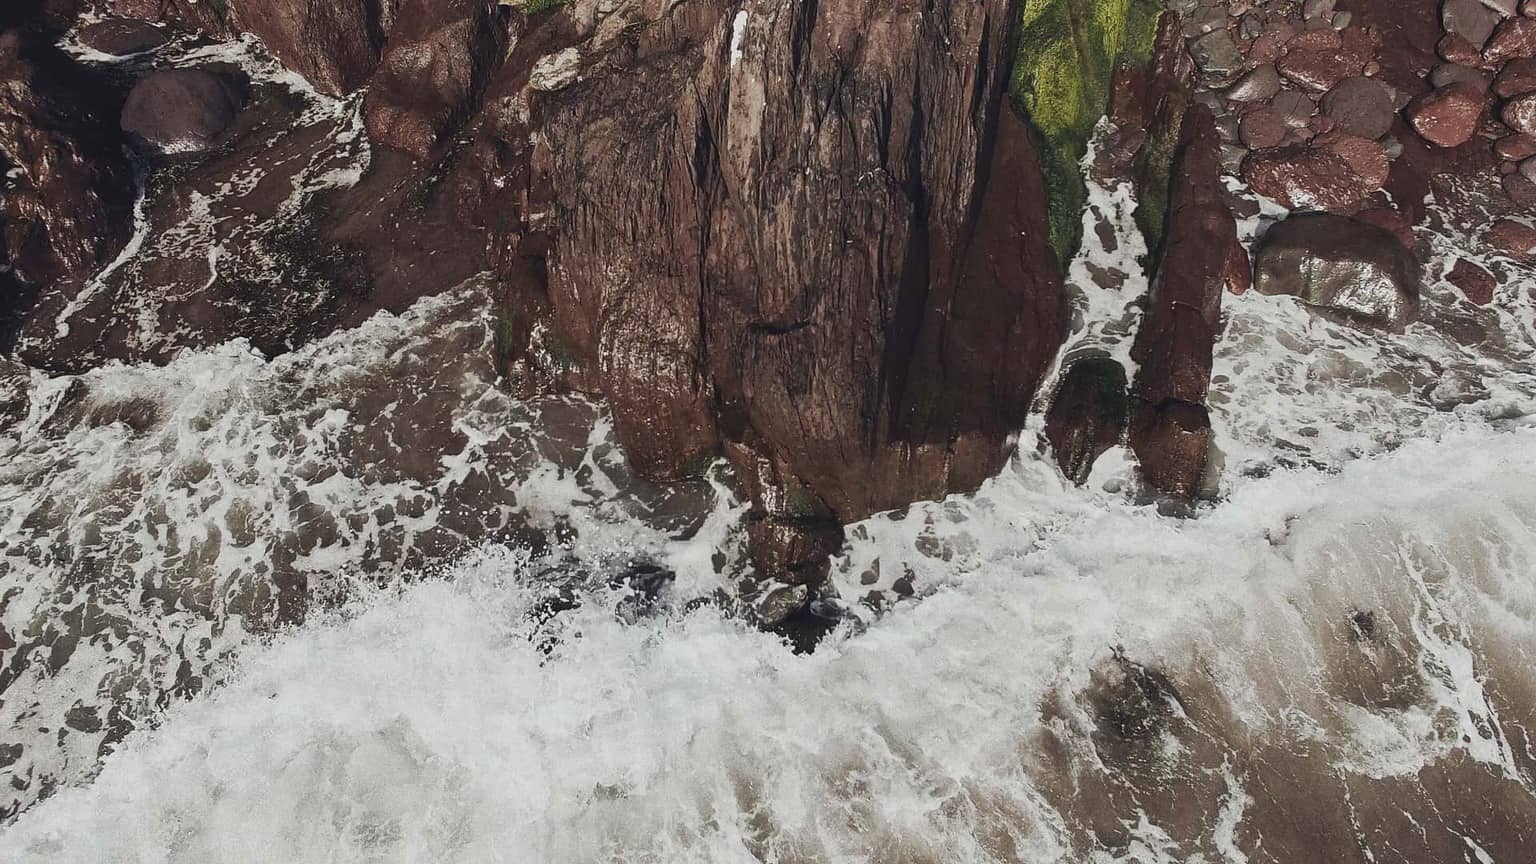 oceans waves splashing on rocks